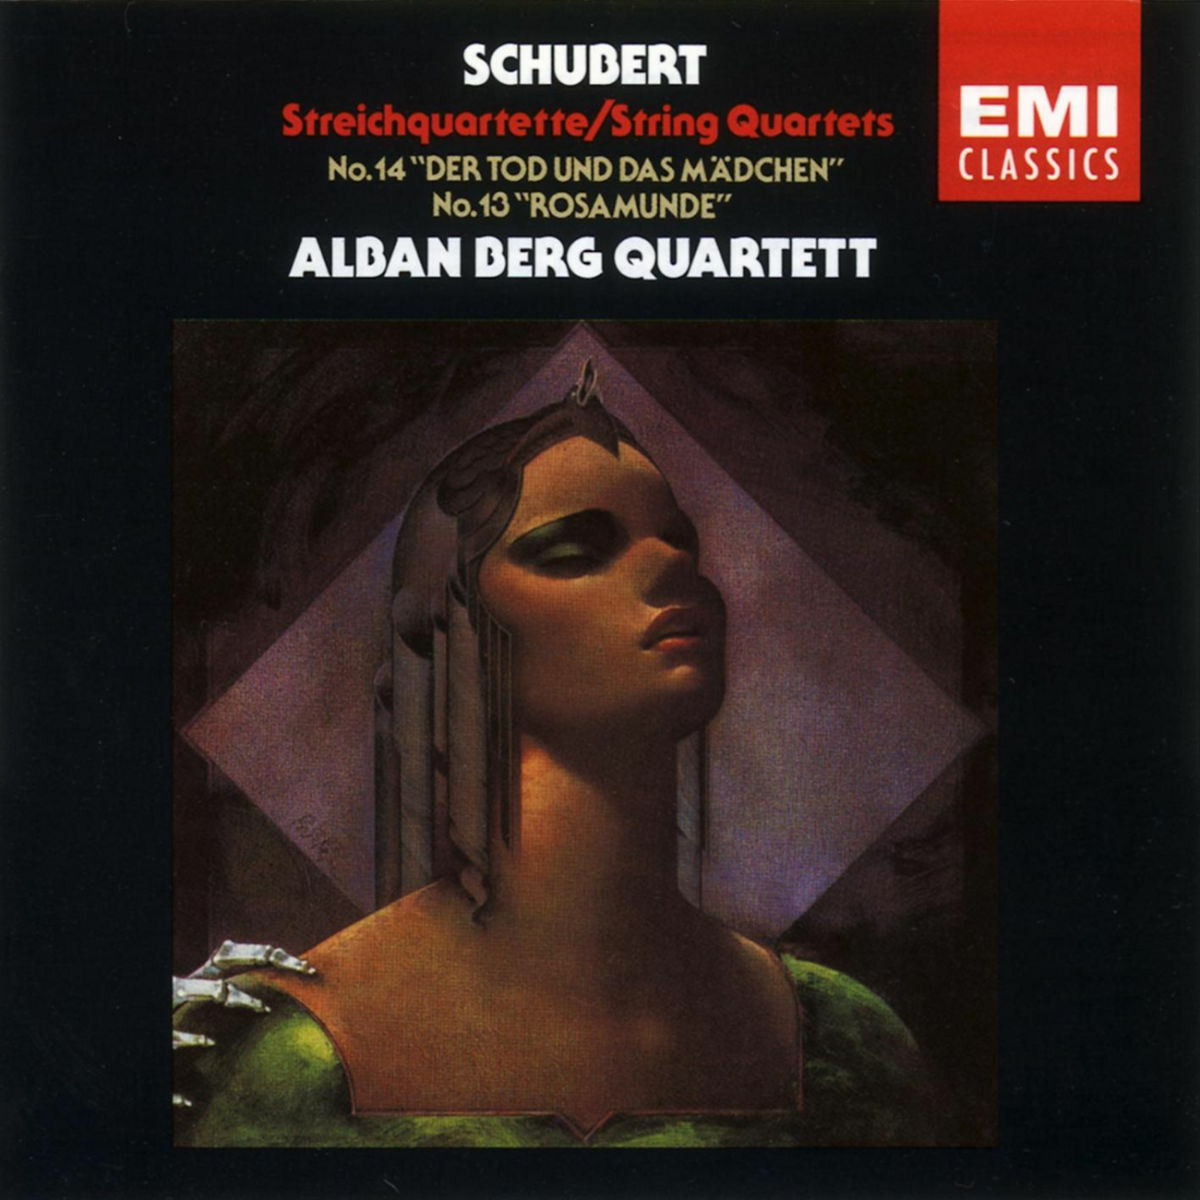 Alban Berg Quartett: albums, songs, playlists | Listen on Deezer